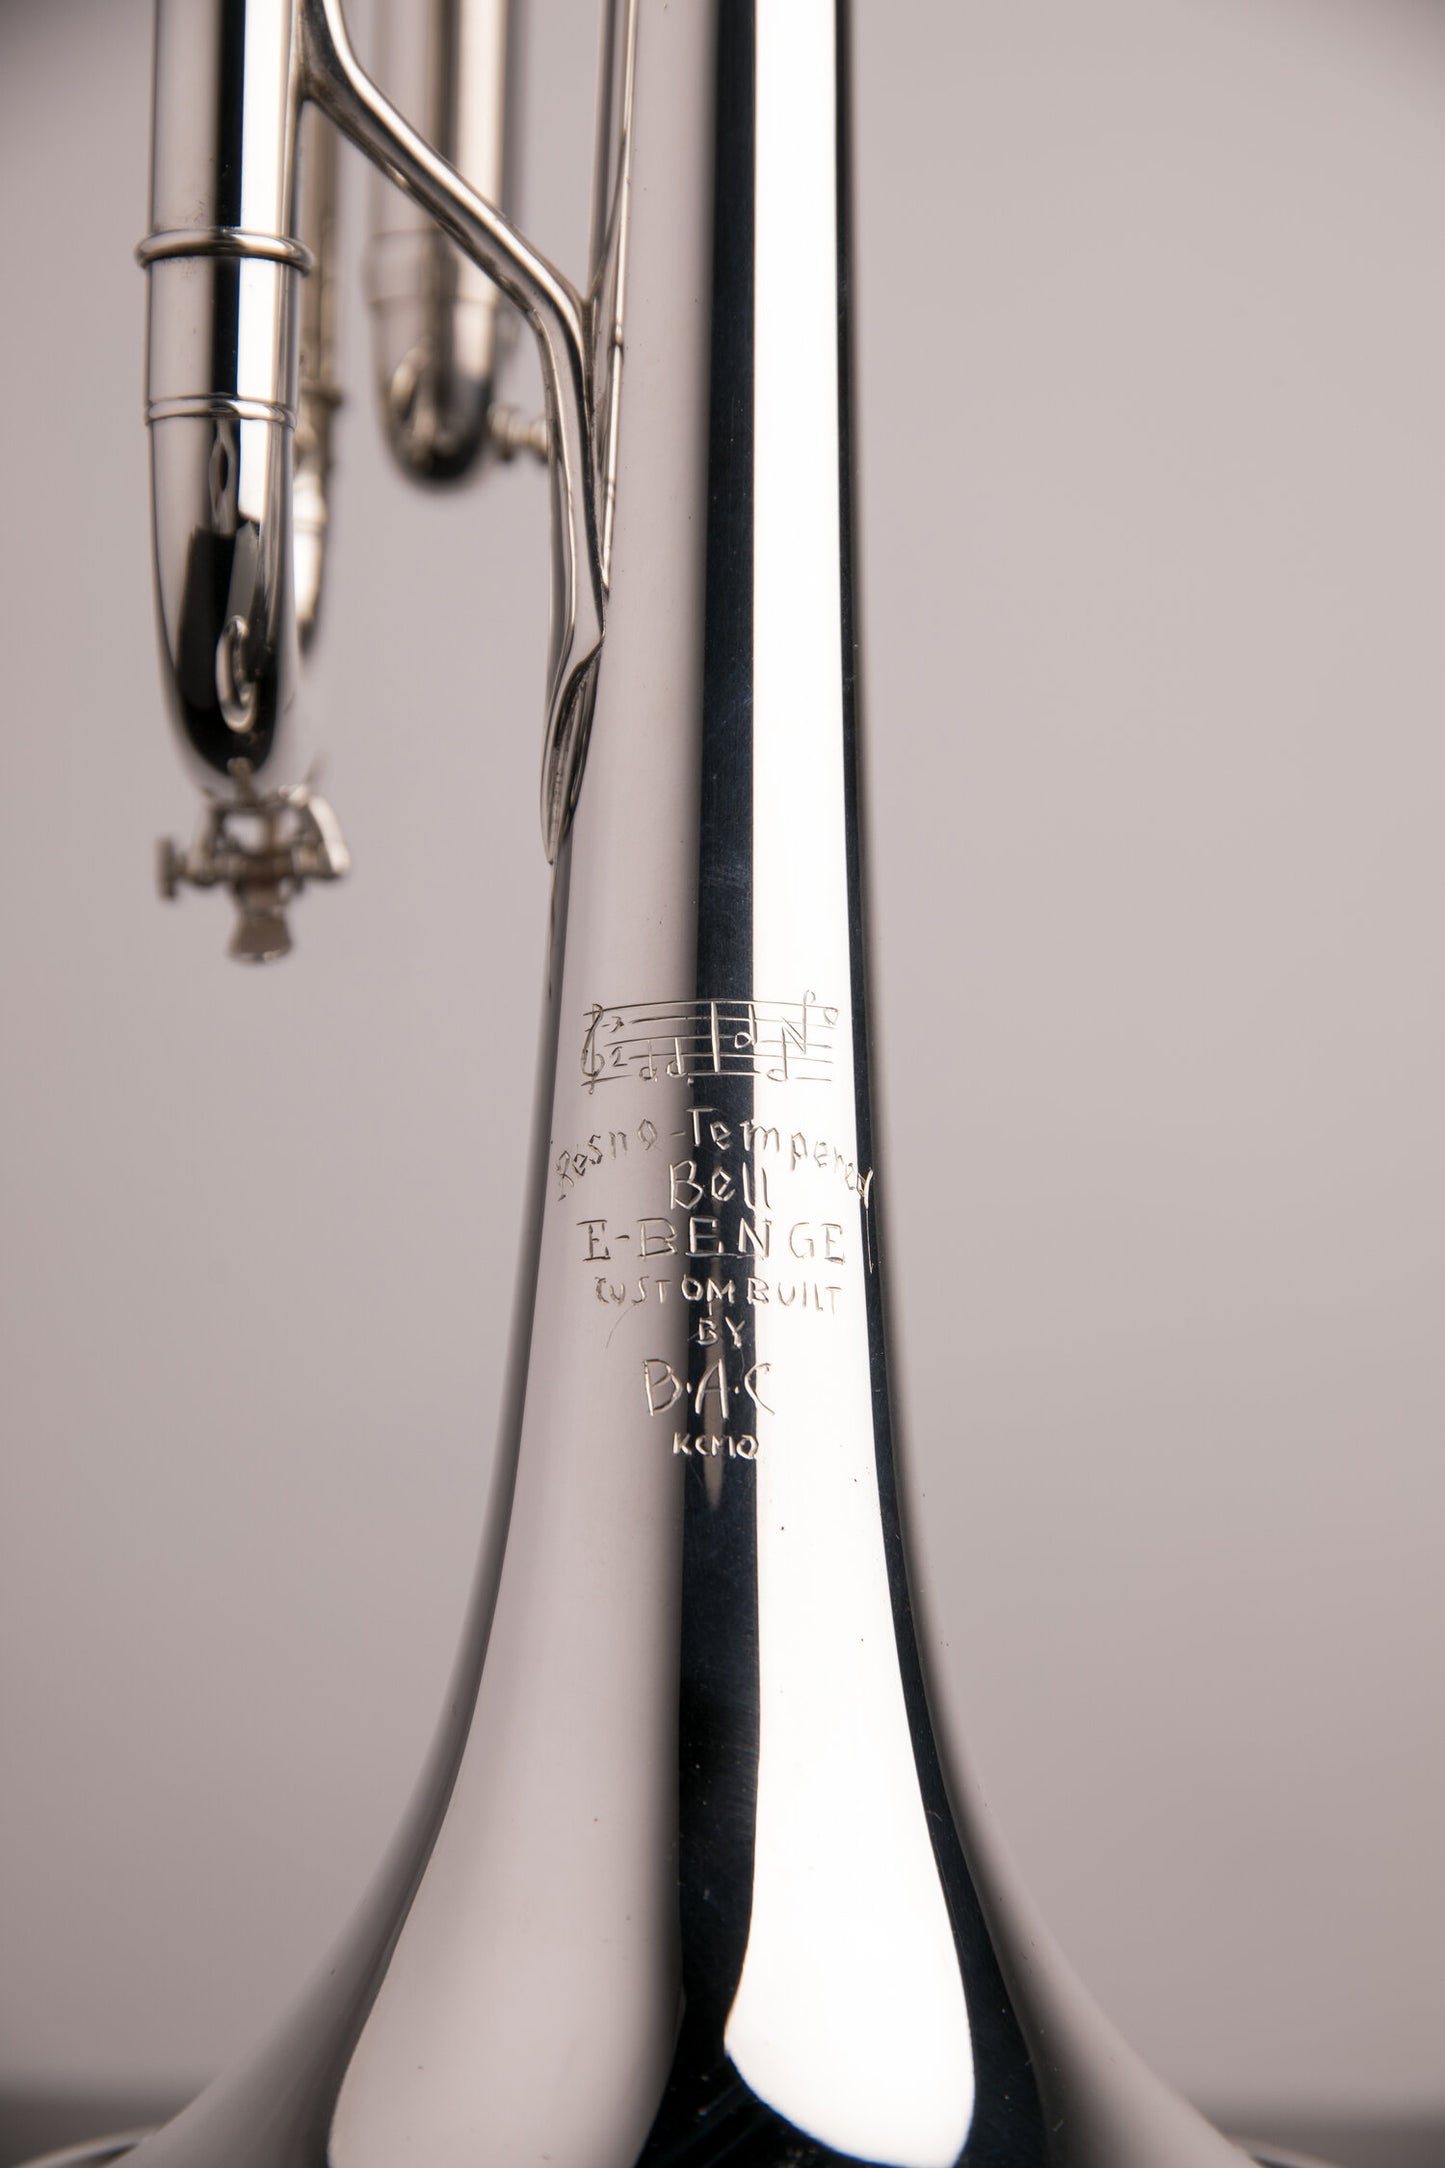 B.A.C. Benge 3X+ Hand Made SIlver Plated Trumpet BAC-B3XPLUS